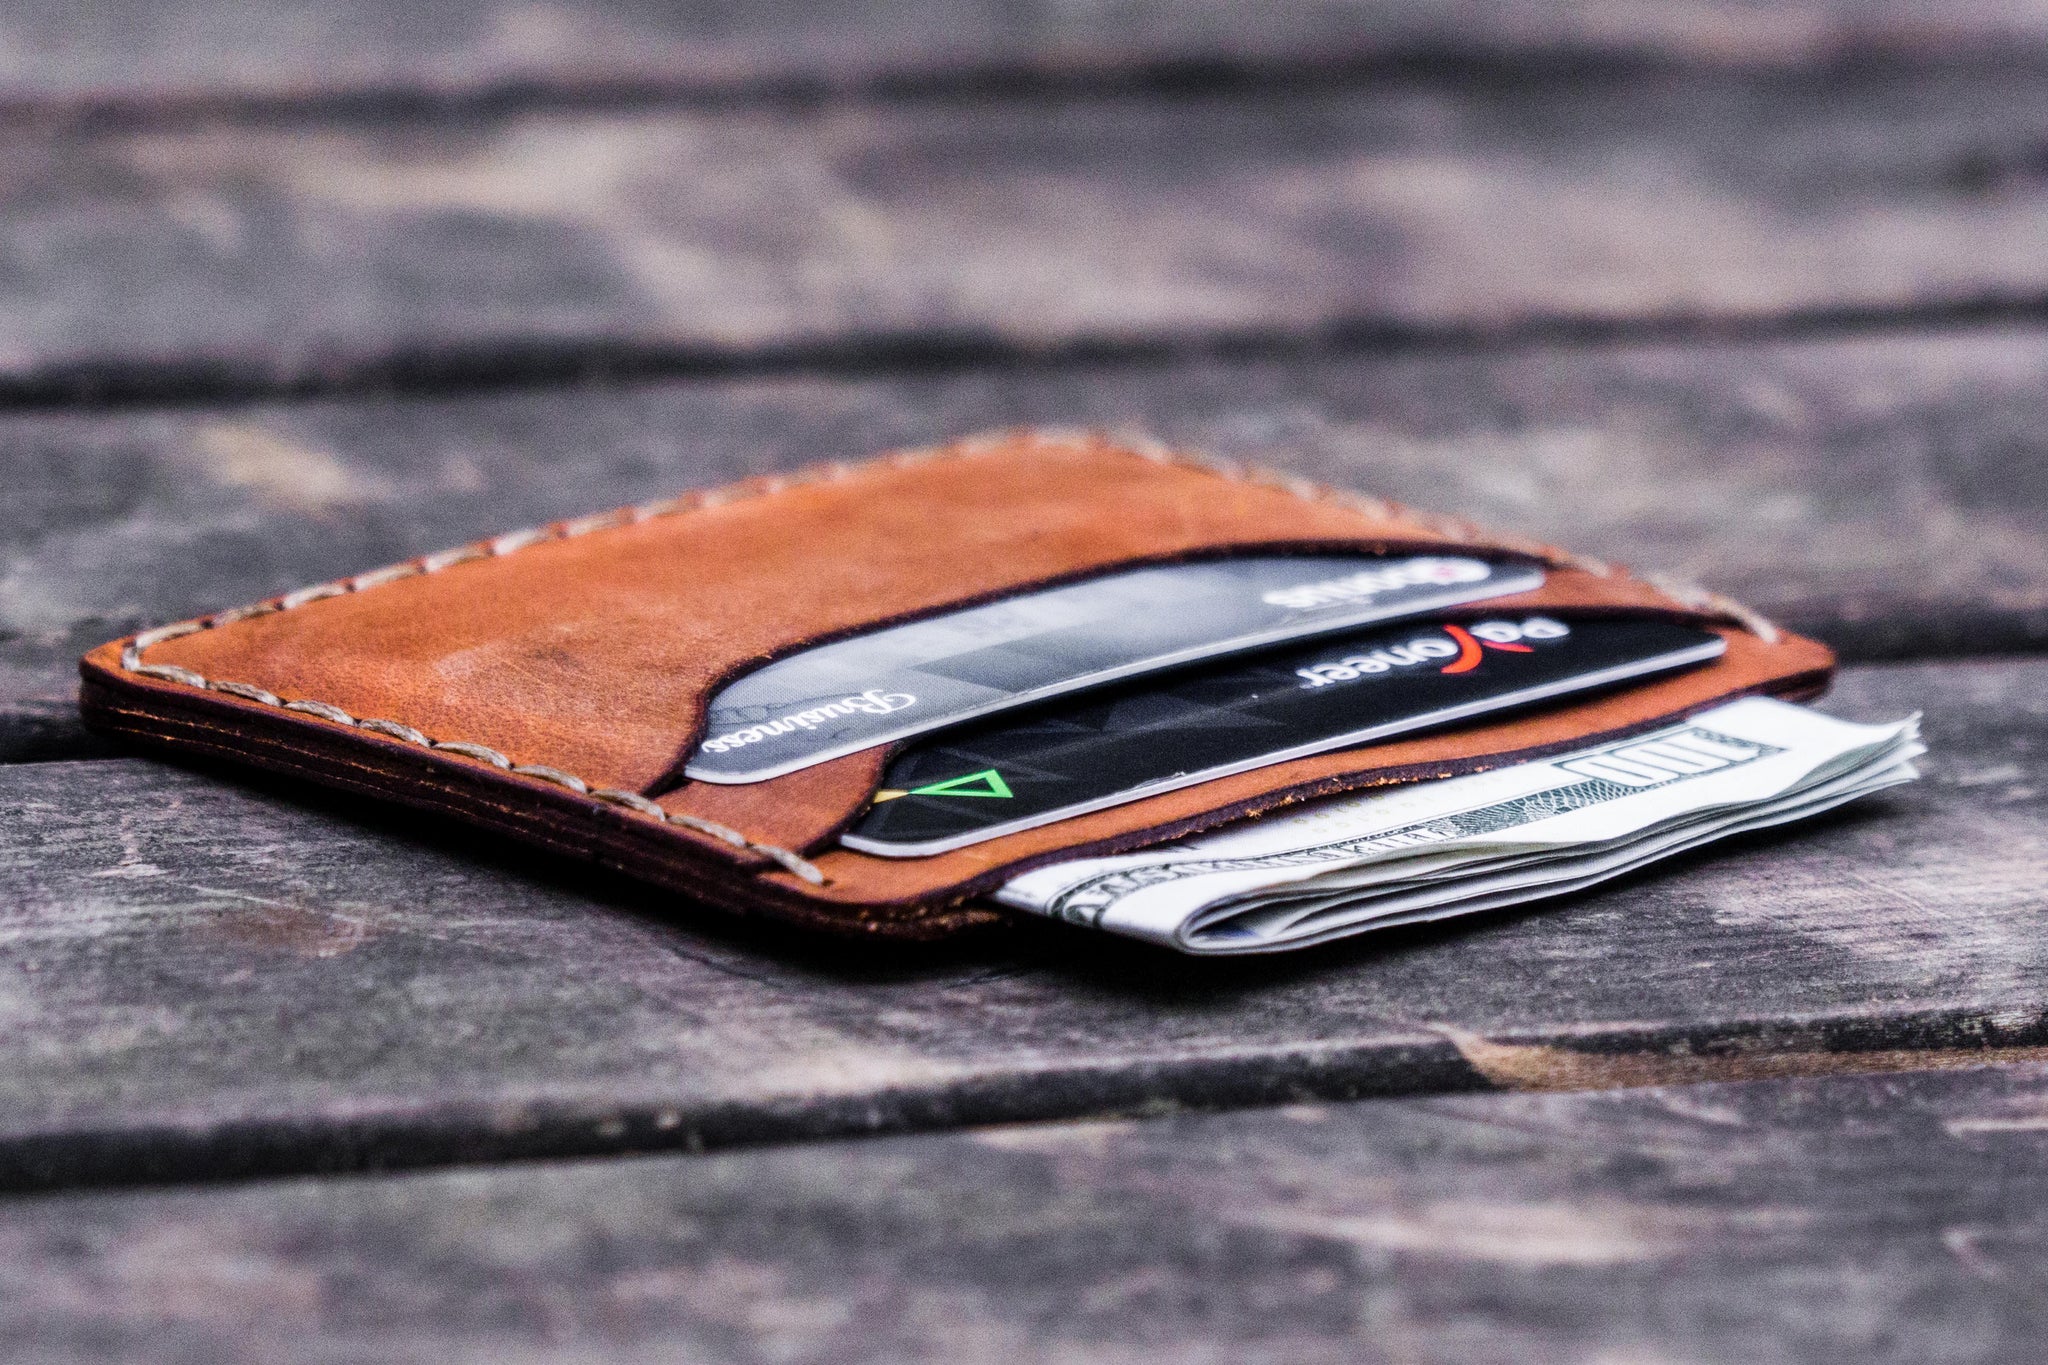 Handmade Leather Wallet Insert - Regular Size - Crazy Horse Brown